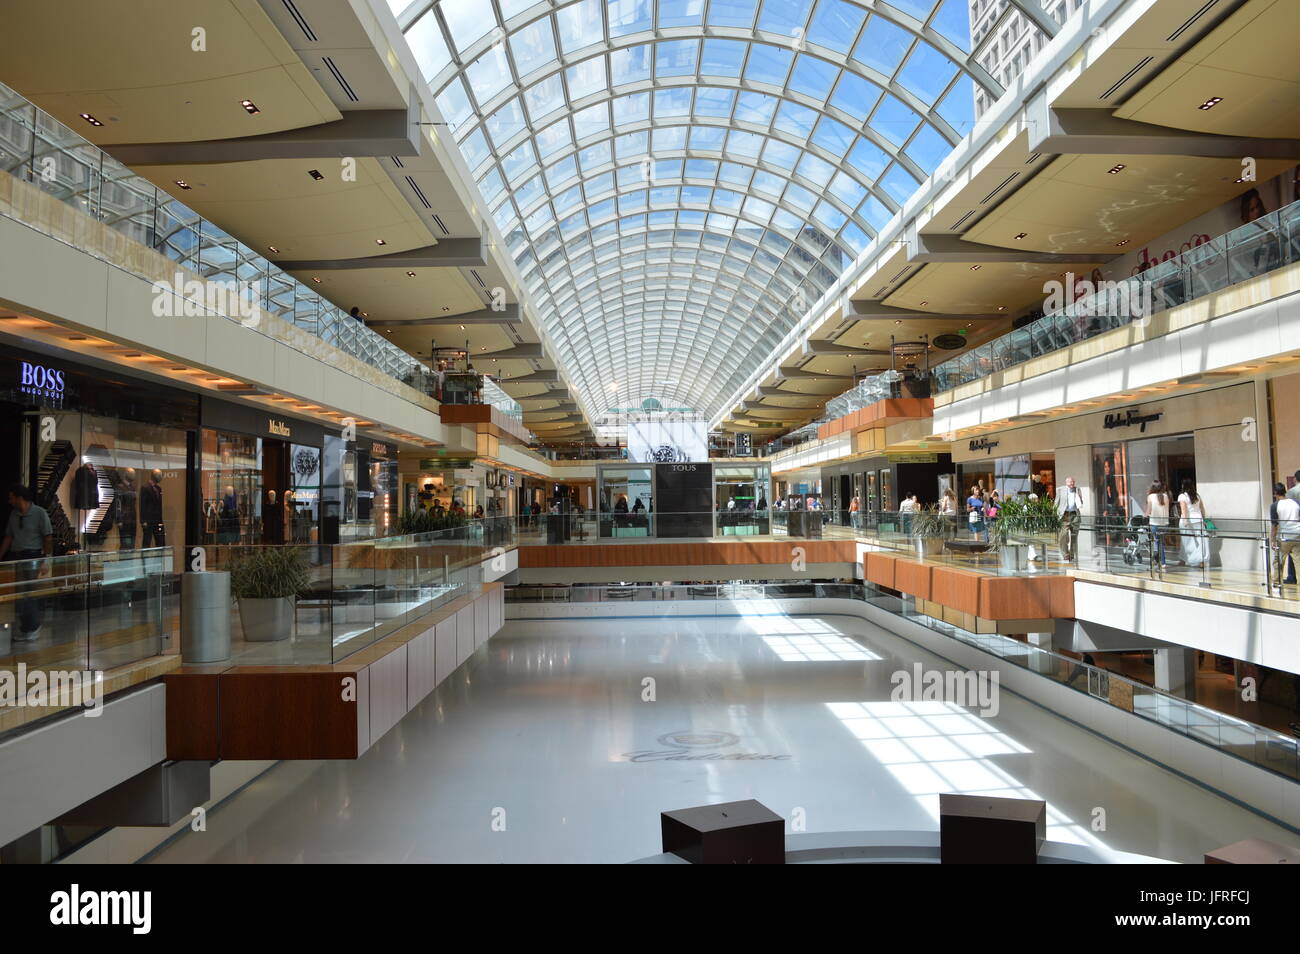 Galleria Mall, Houston Stock Photo: 147419794 - Alamy